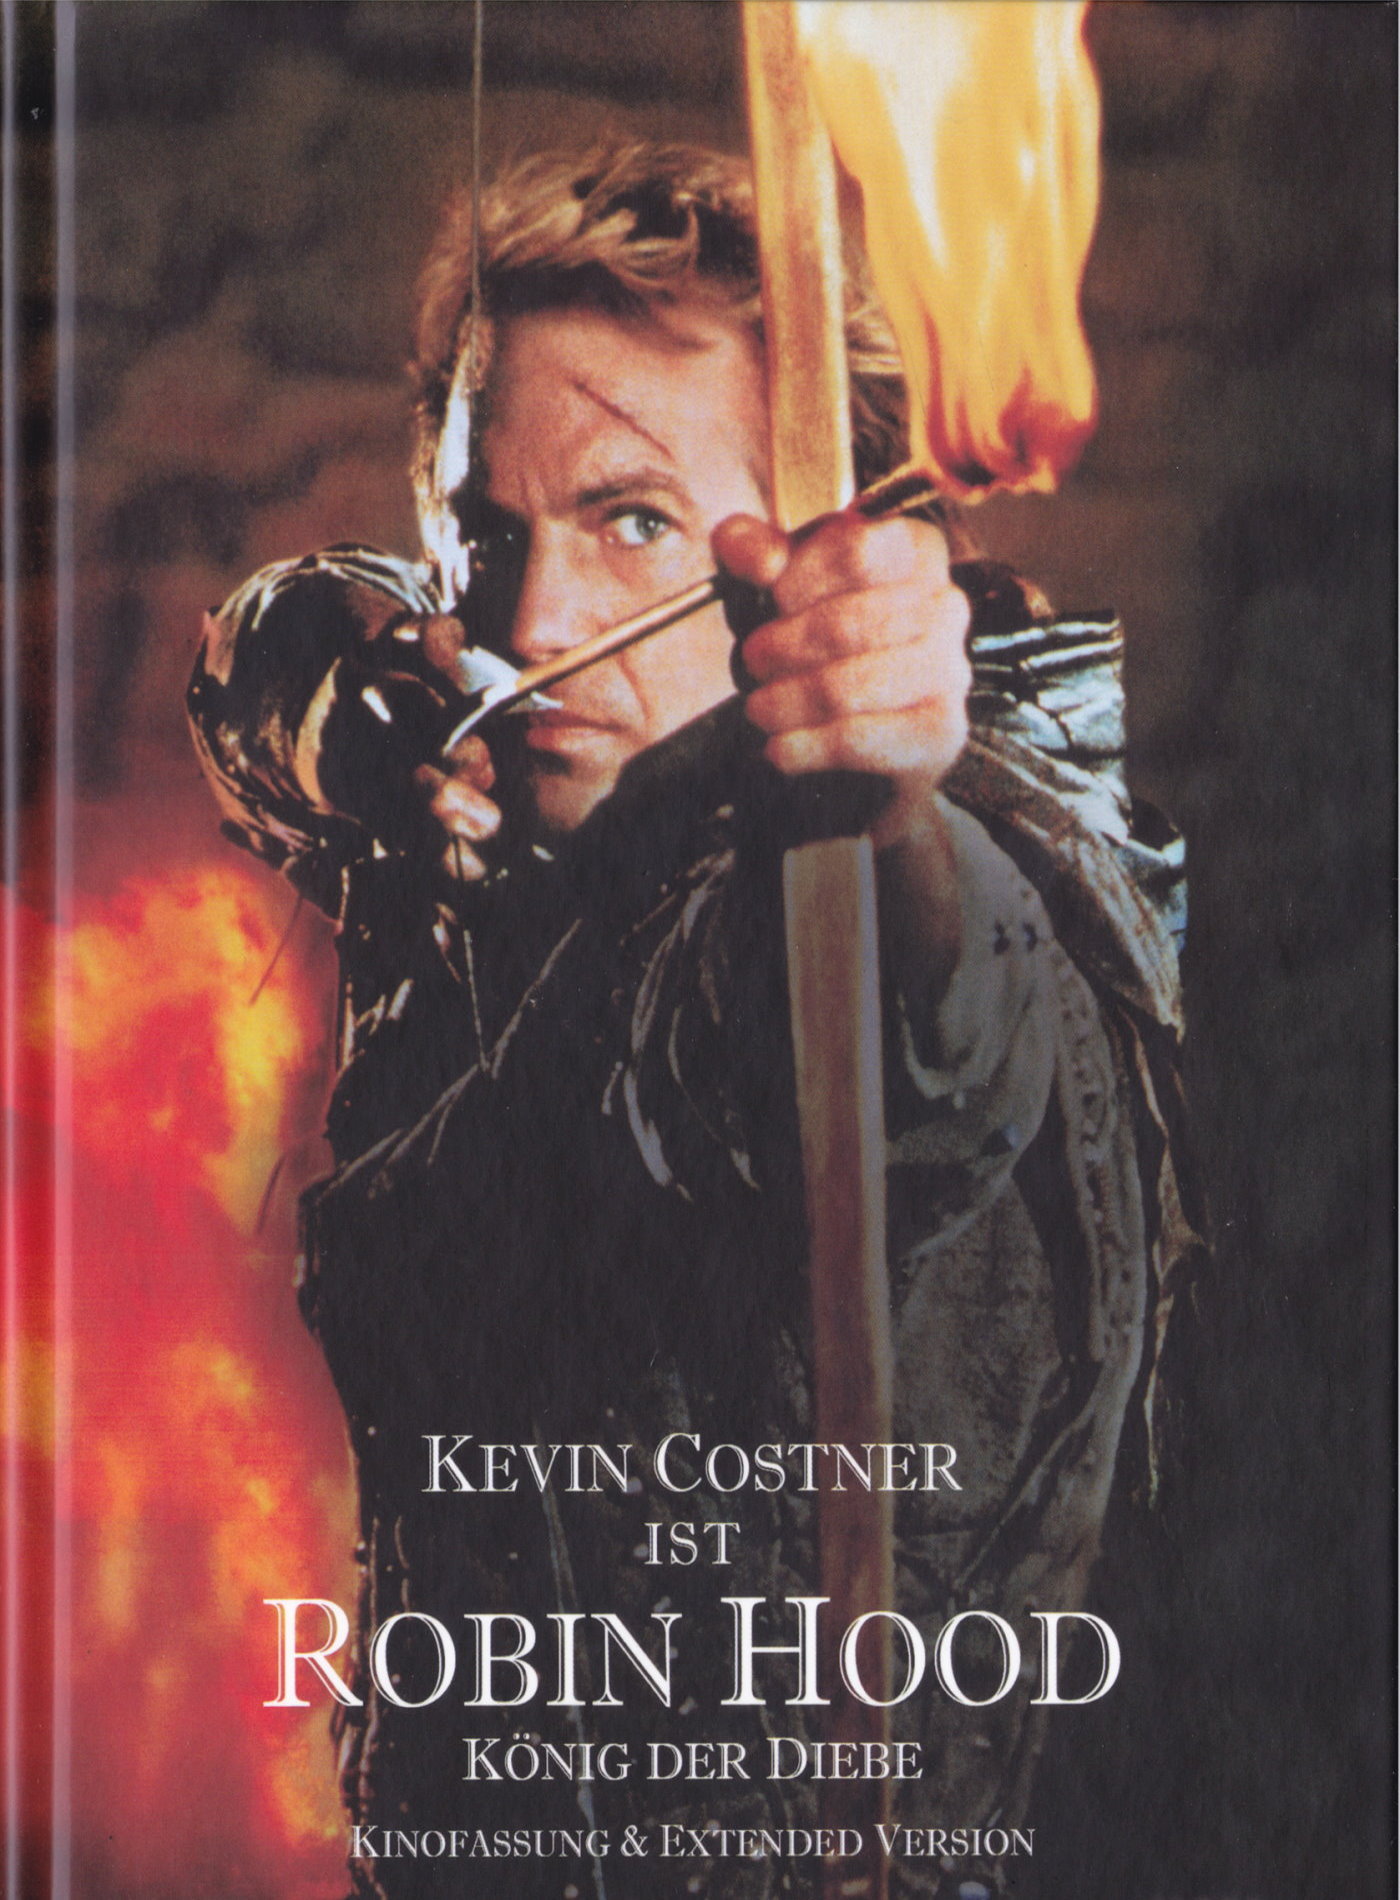 Cover - Robin Hood - König der Diebe.jpg